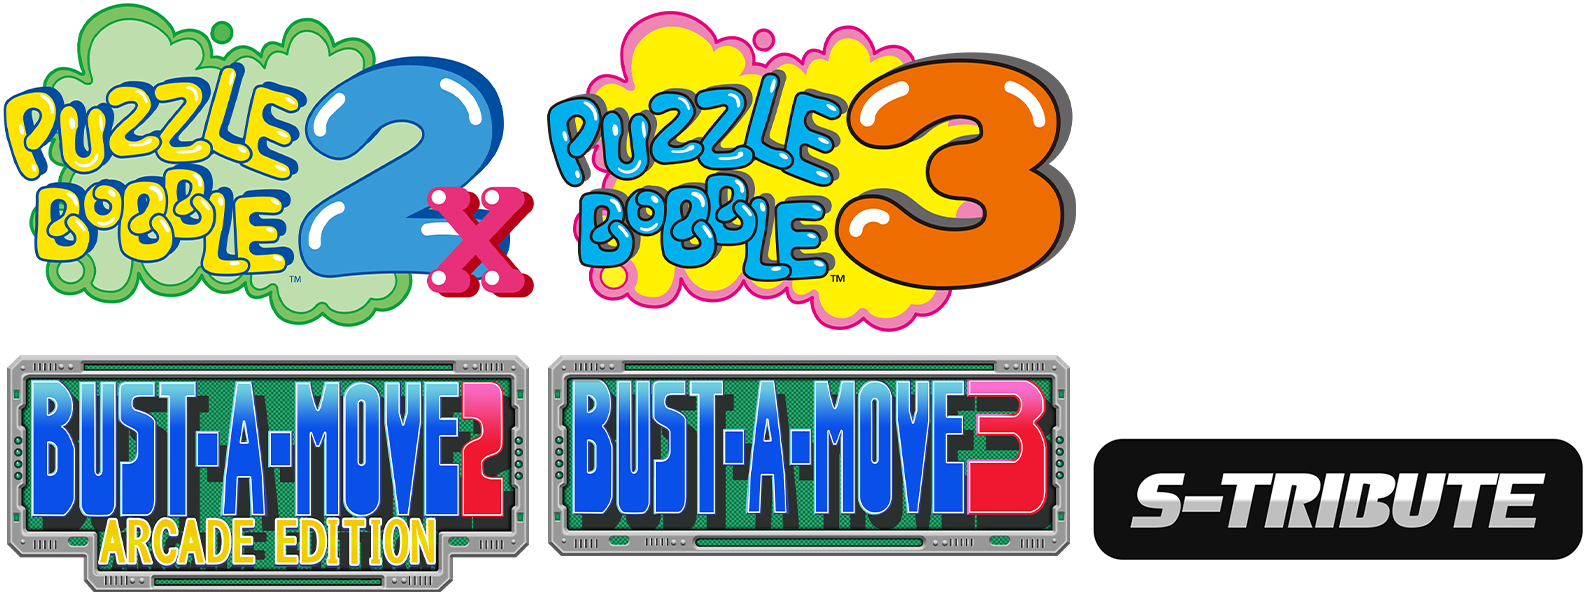 Comprar Puzzle Bobble™2X/BUST-A-MOVE™2 Arcade Edition & Puzzle Bobble™3/BUST-A-MOVE™3  S-Tribute